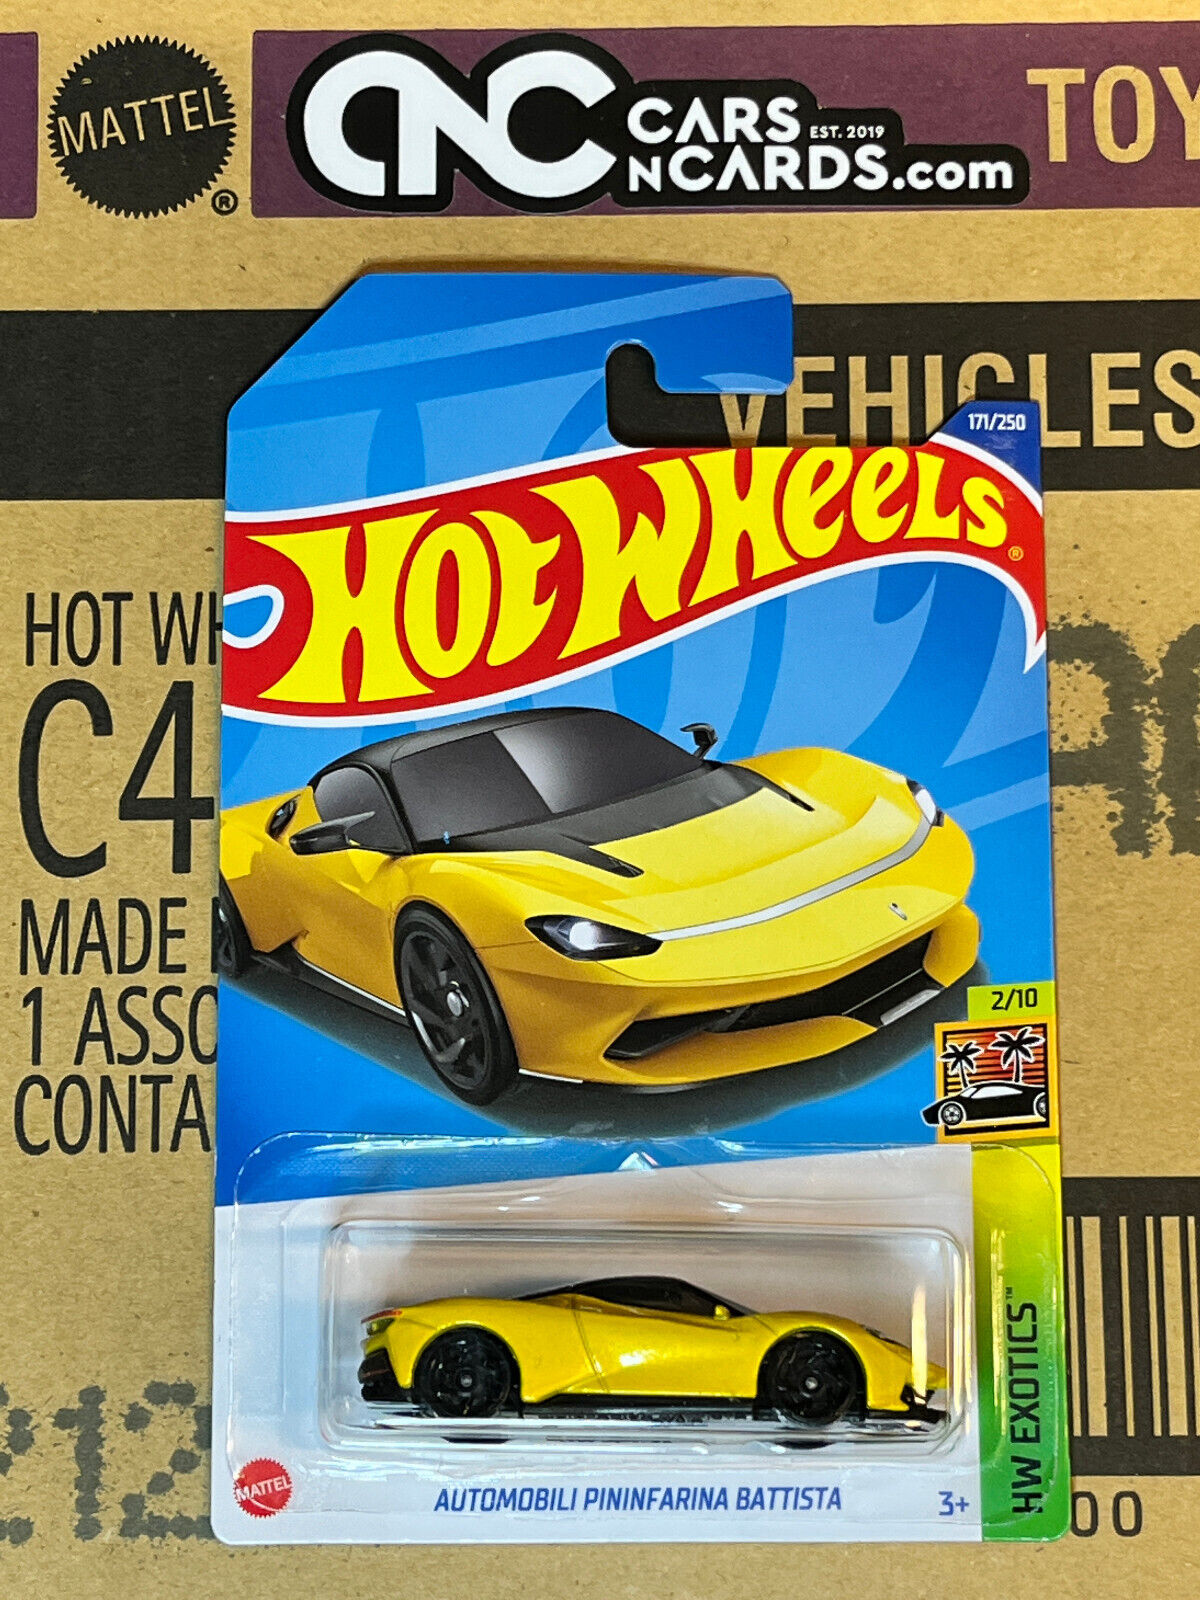 2022 Hot Wheels HW Exotics #2/10 Automobili Pininfarina Battista Yellow #171/250